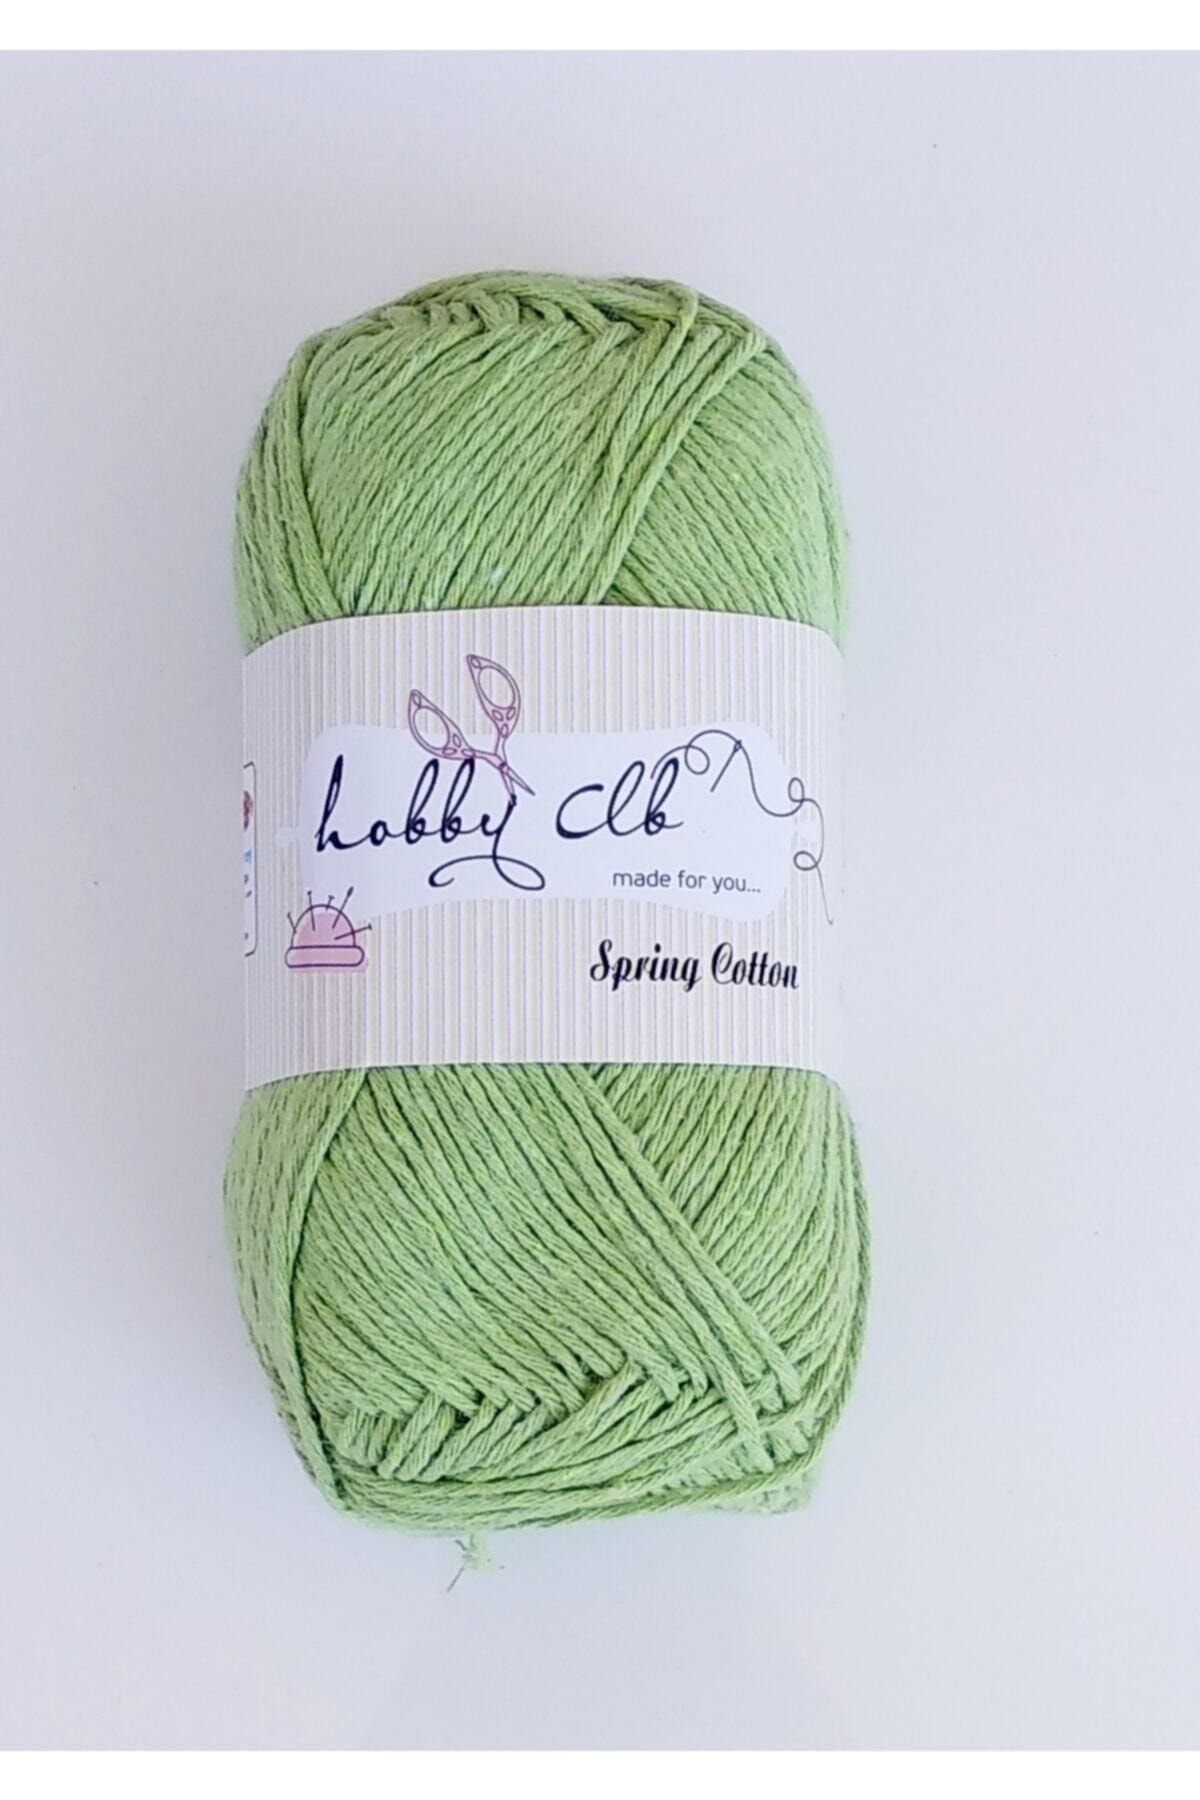 Kezban Tekstil Hobby Clb Fıstık Yeşili Amigurumi Ve Punch (panç) Ipi %100 Pamuk Natürel Koton